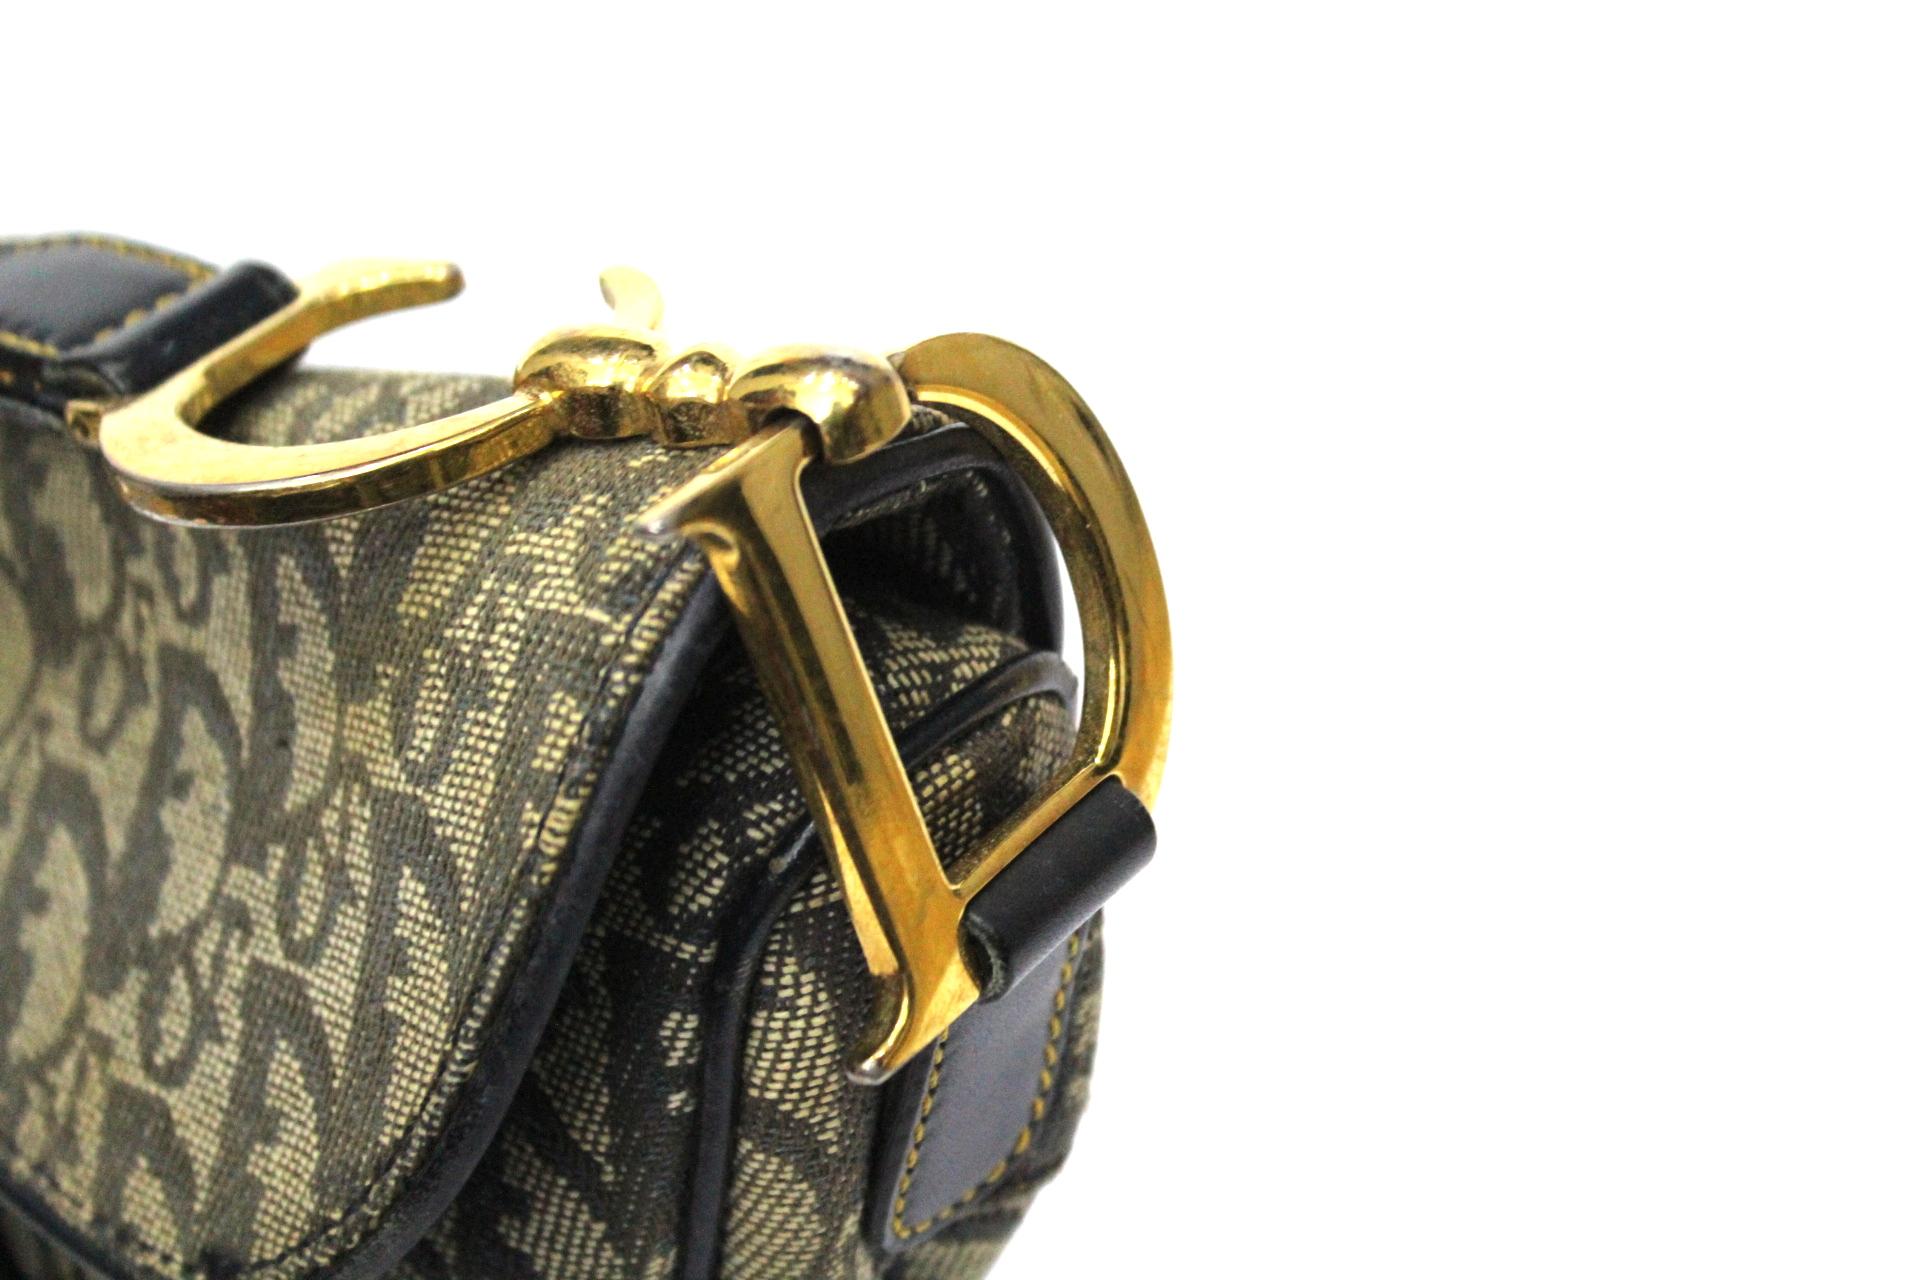 Iconic Vintage bag from Christian Dior, the Saddle Bag.